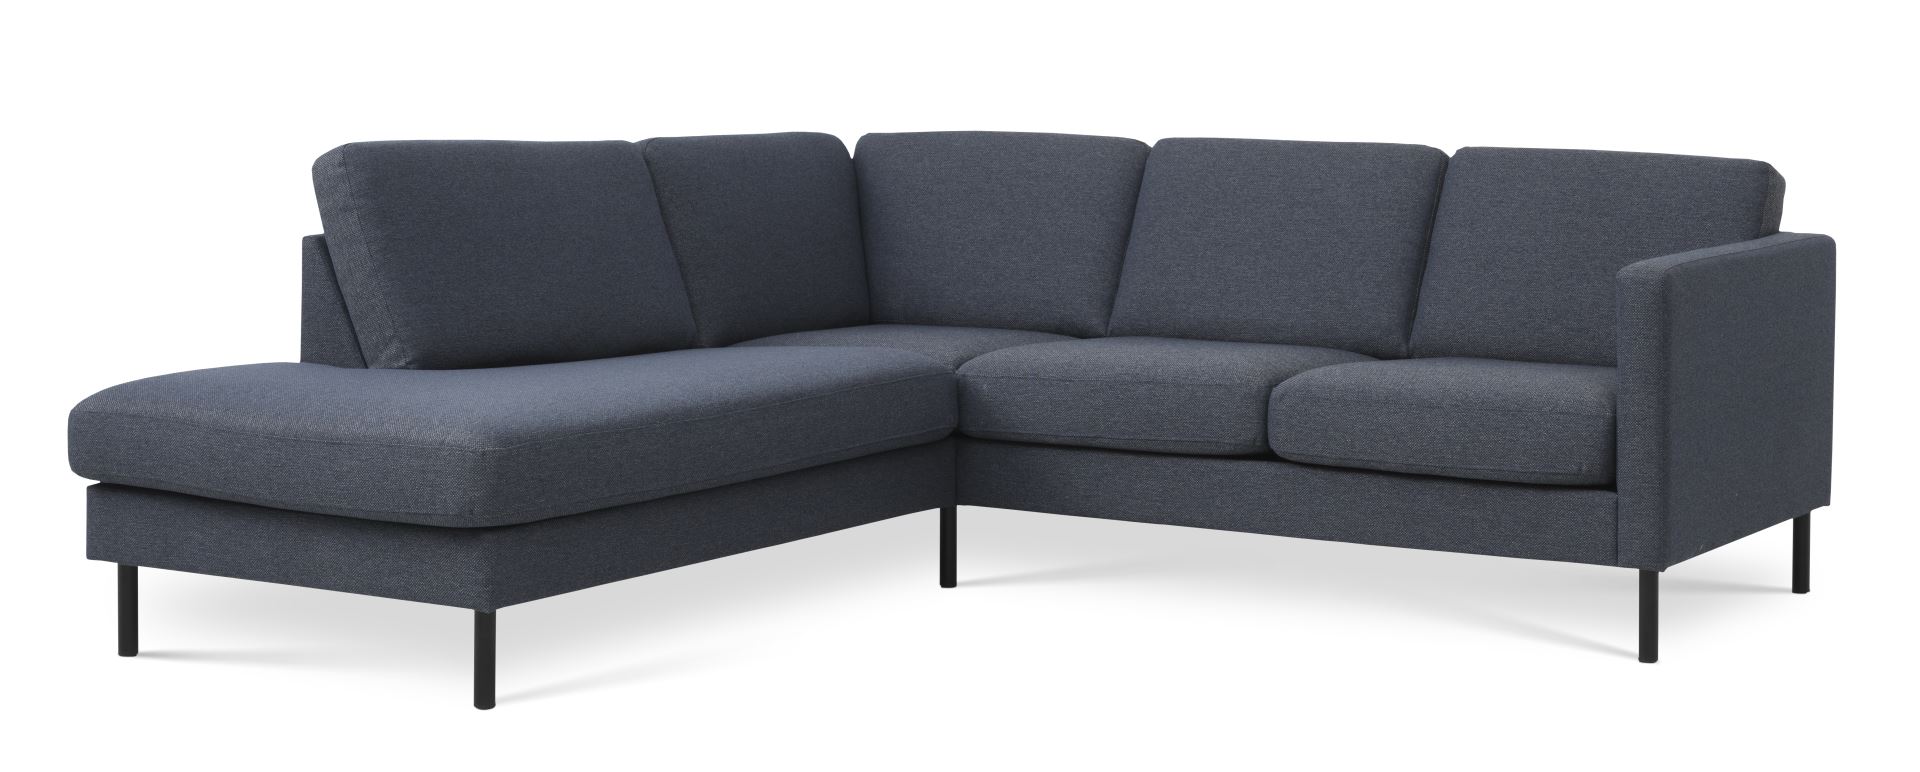 Ask sæt 52 lille OE sofa, m. venstre chaiselong - navy blå polyester stof og sort metal